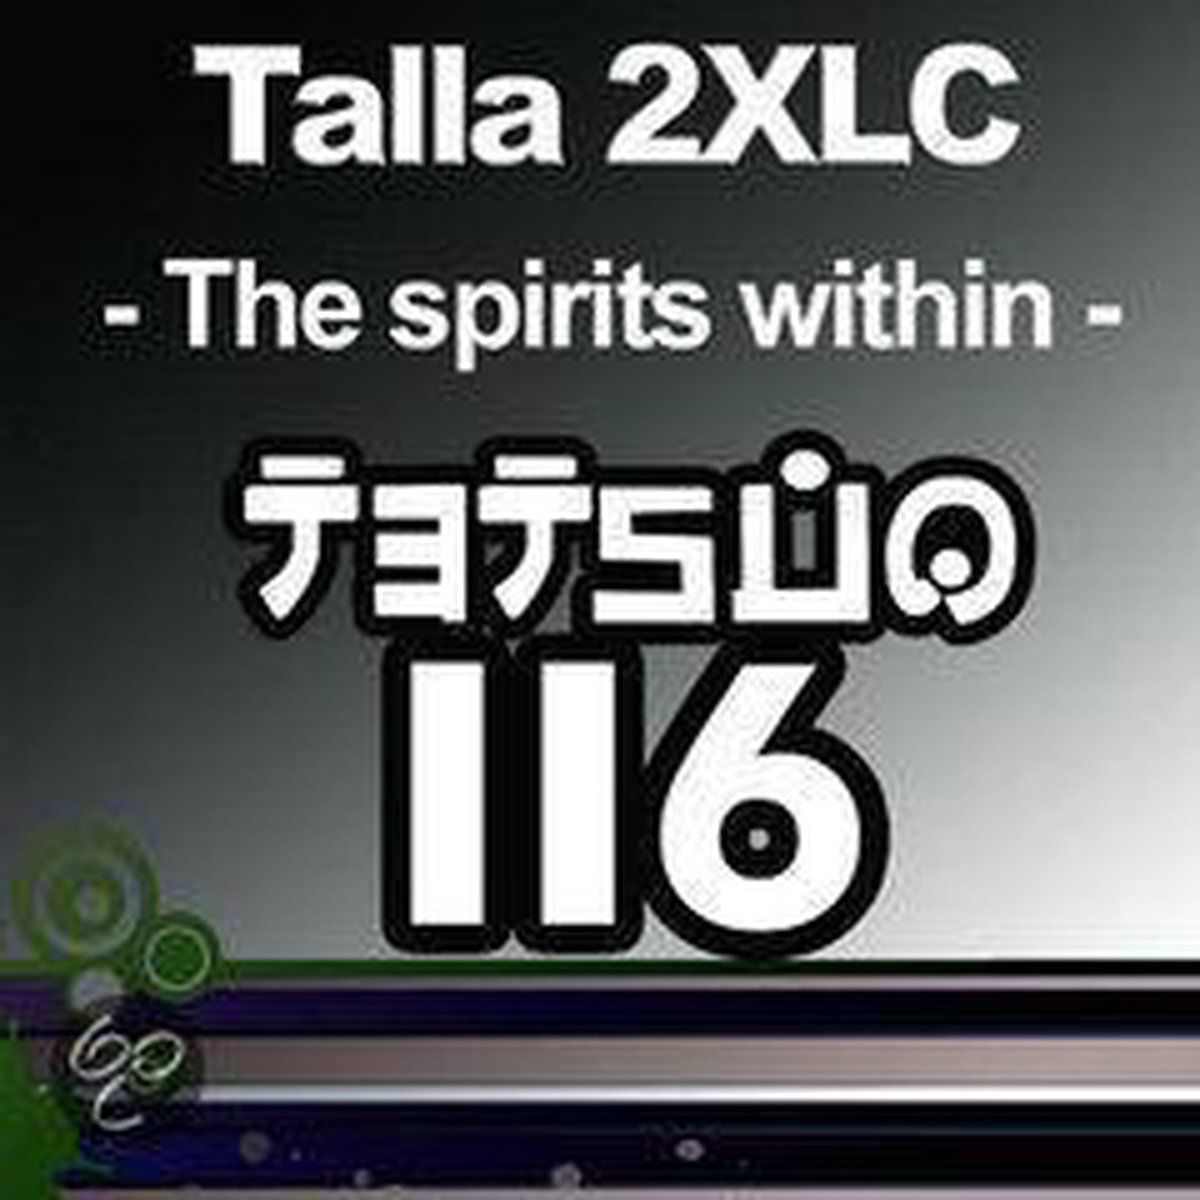 Spirits Within - Talla 2Xlc